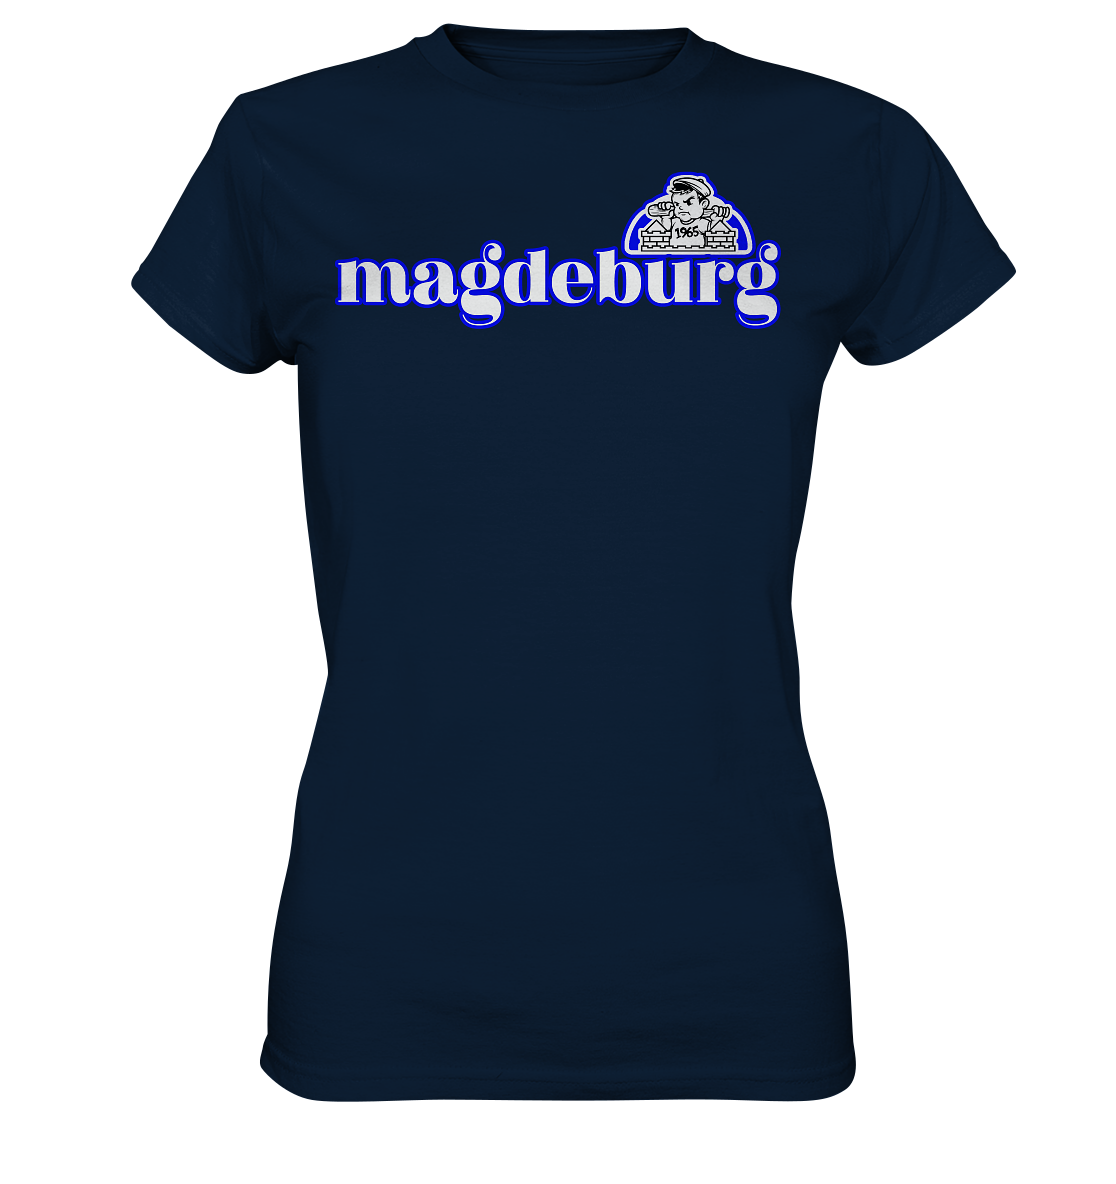 Magdeburger - Ladies Premium Shirt